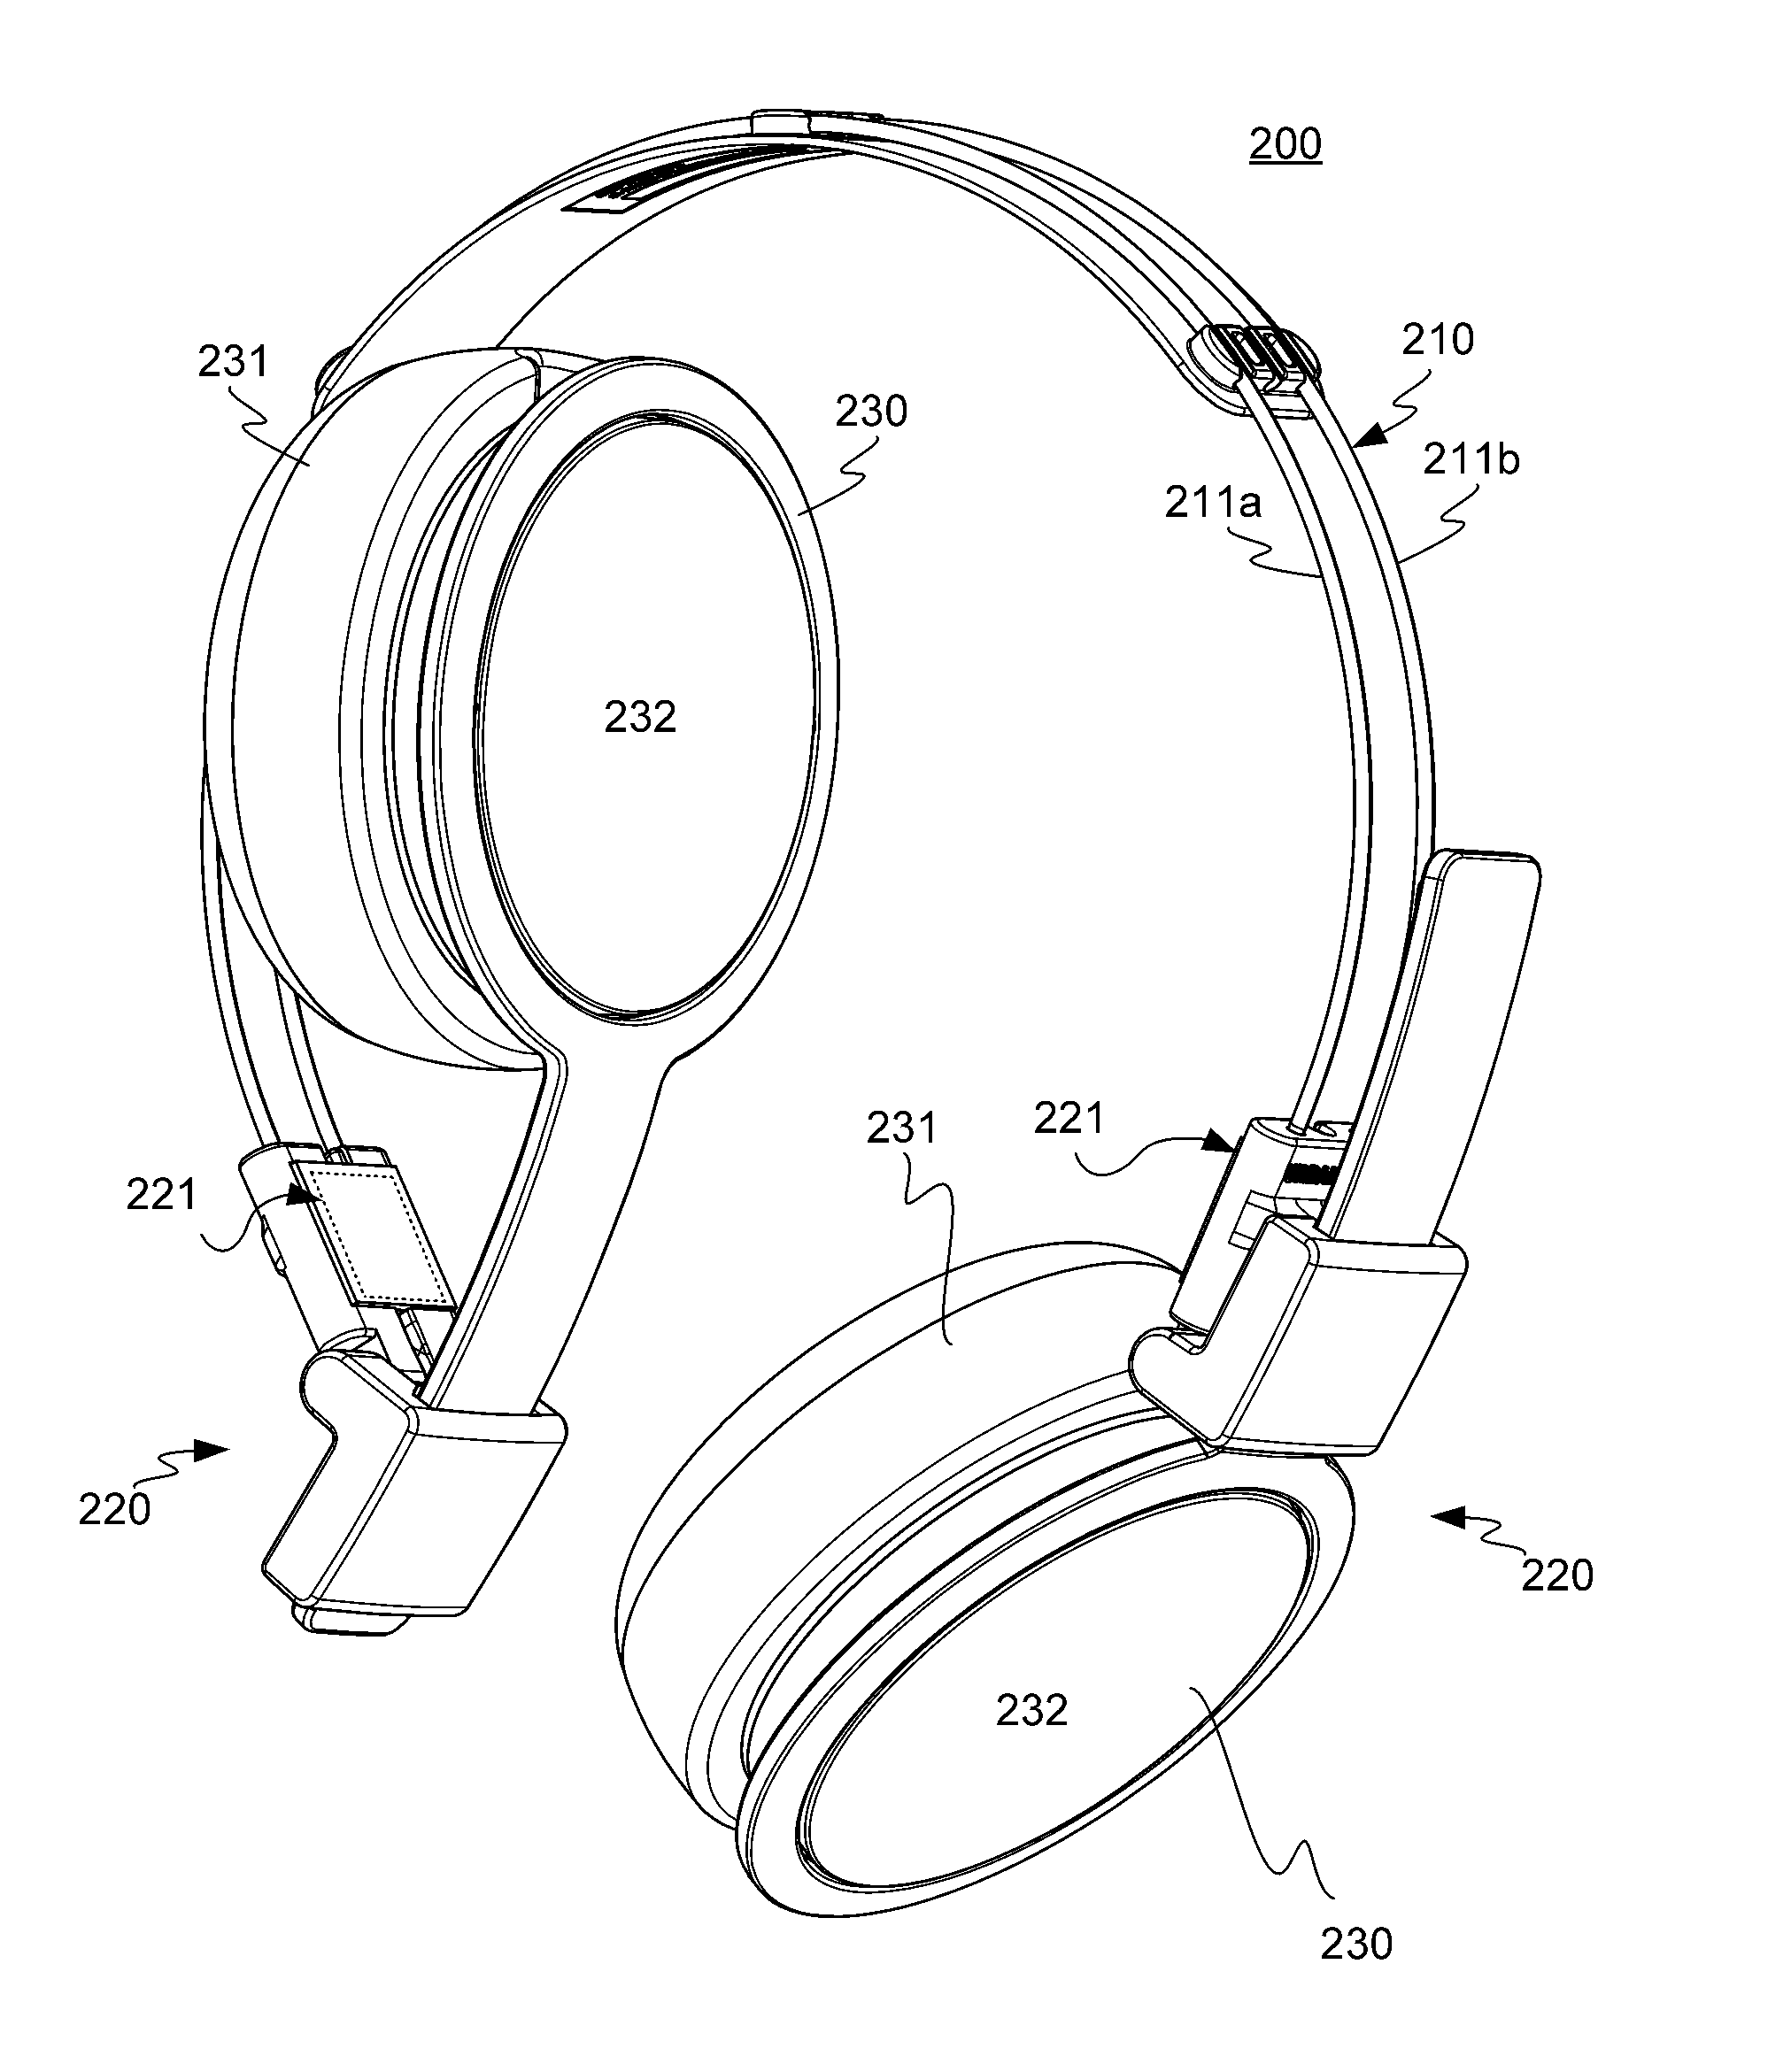 Headband cover for a headband of a headphone